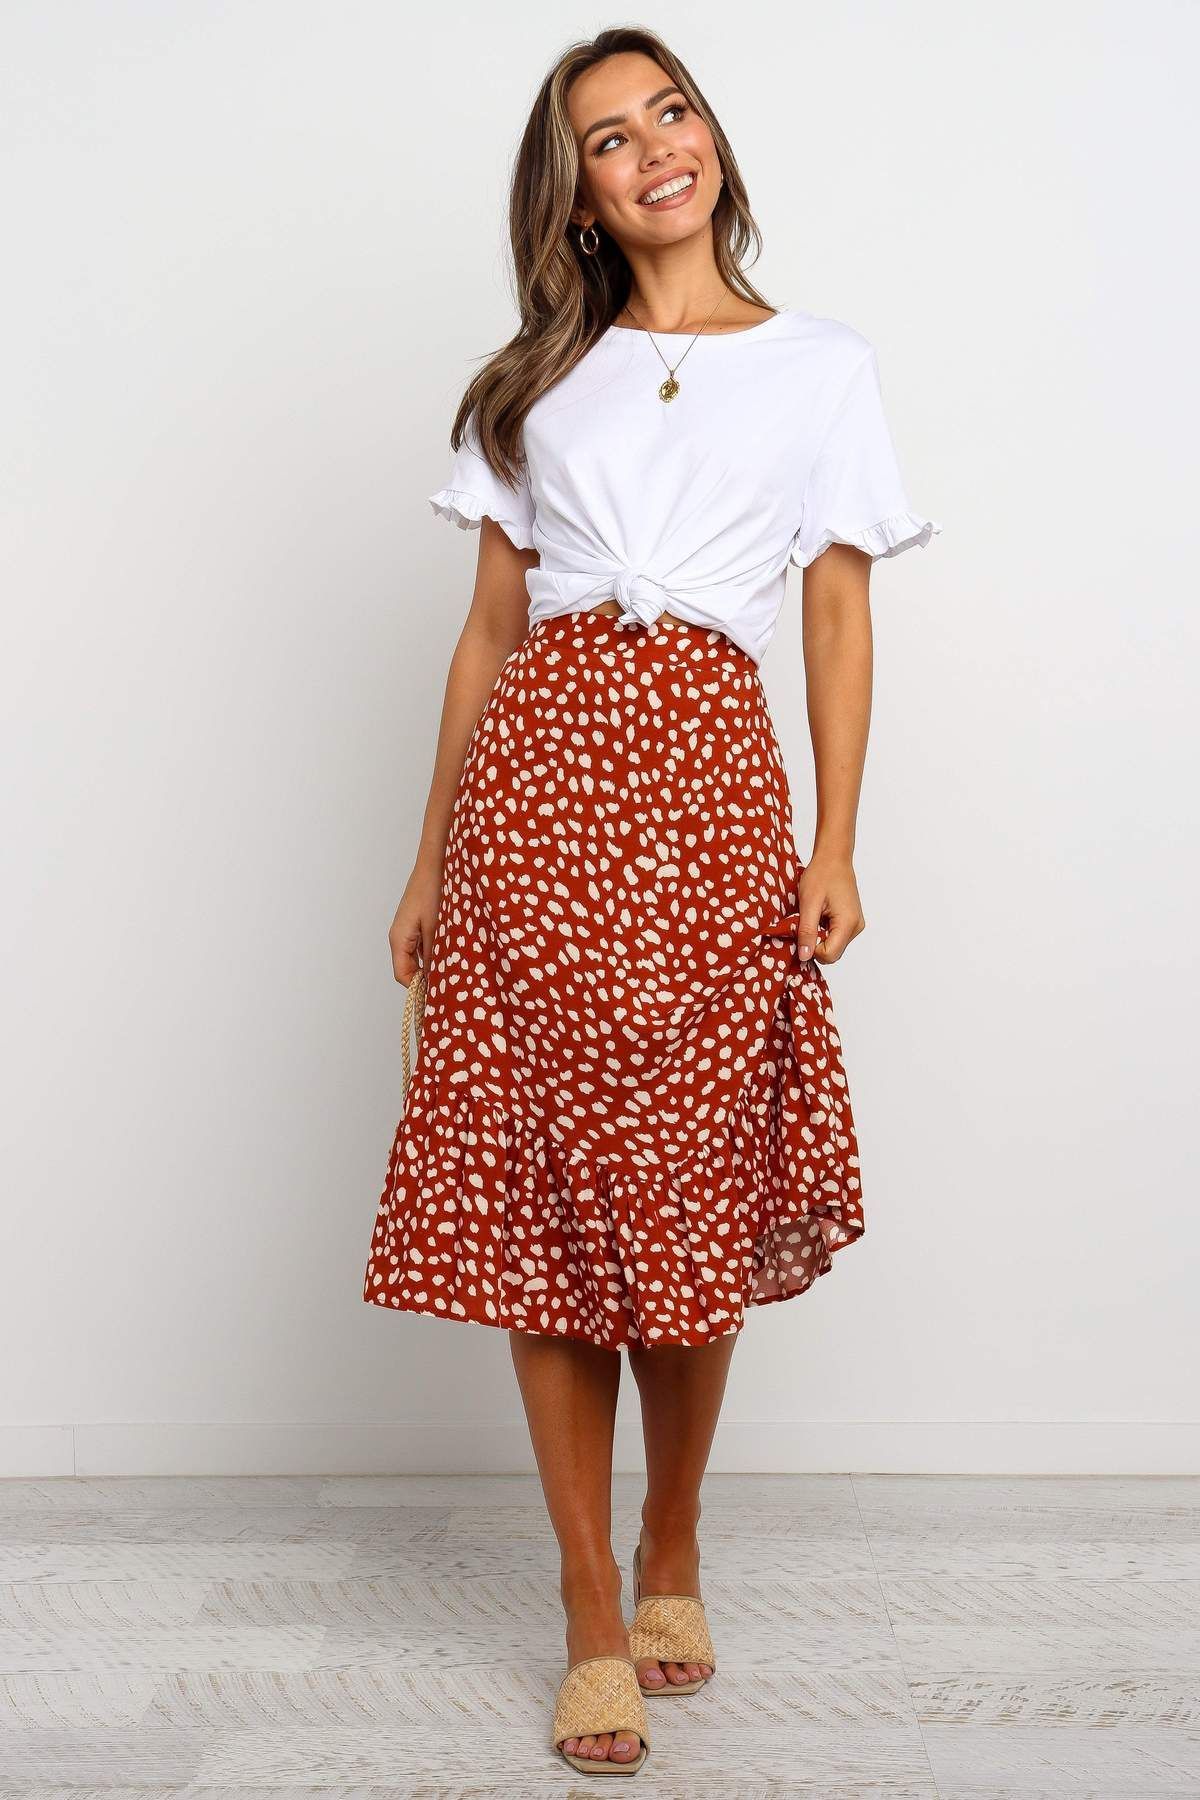 Anderson Skirt - Rust - Anderson Skirt - Rust -   19 style Summer modest ideas